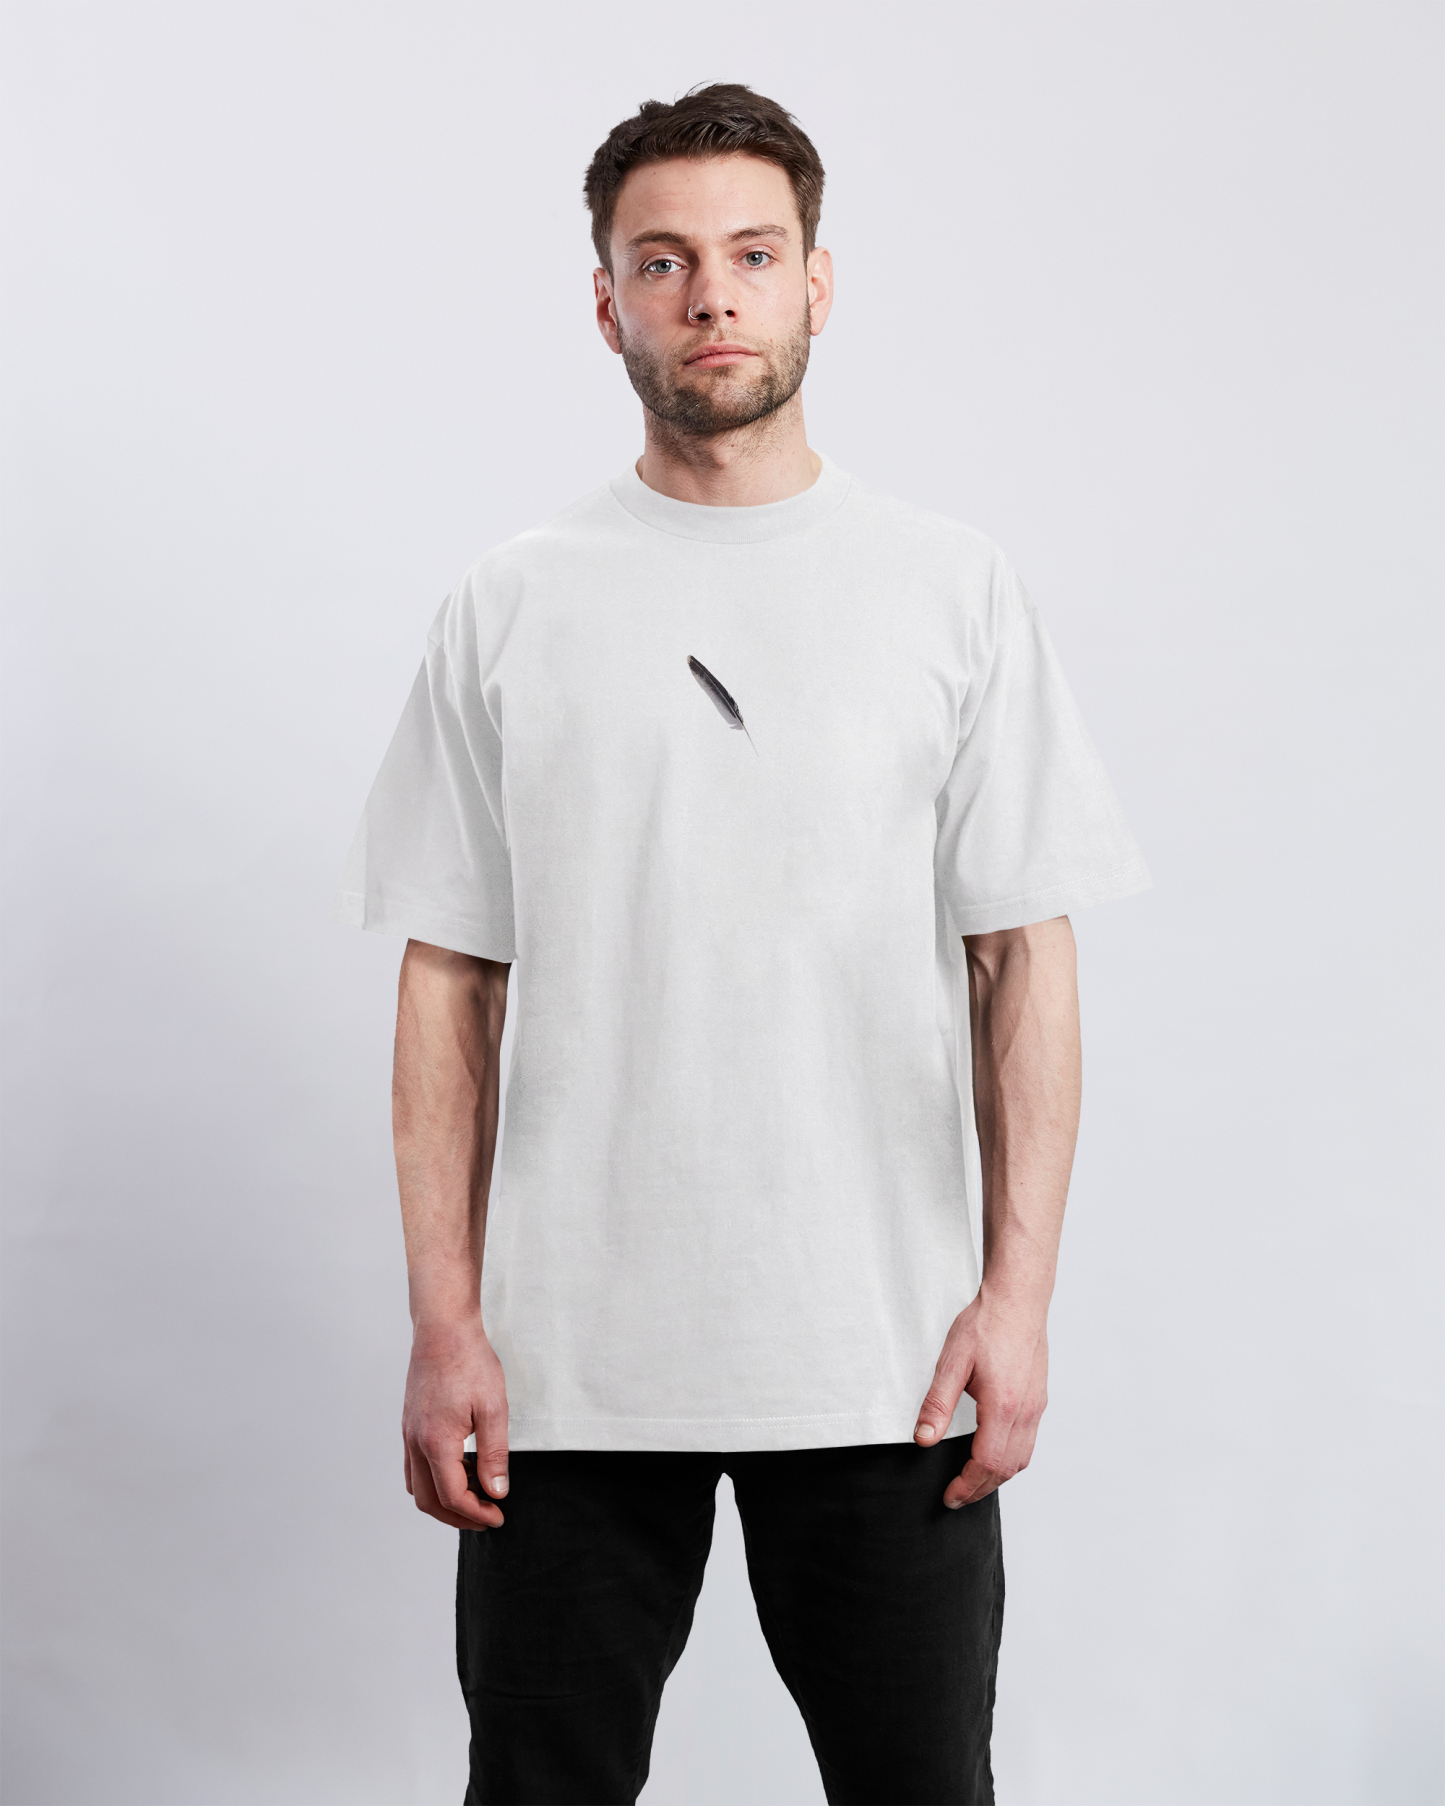 Death Note Akuma Collection | White T-shirt